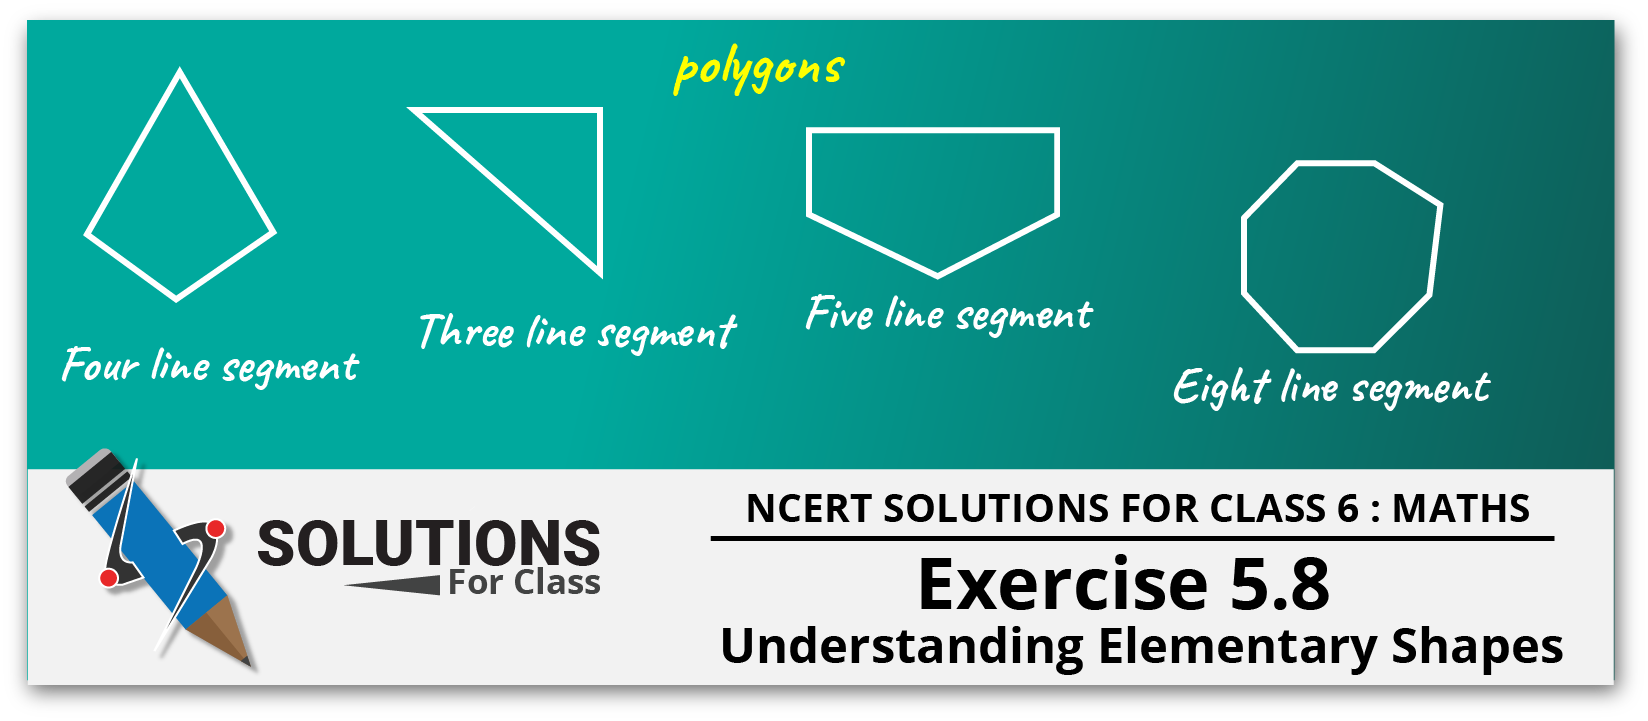 Understanding Elementary Shapes, Exercise 5.8